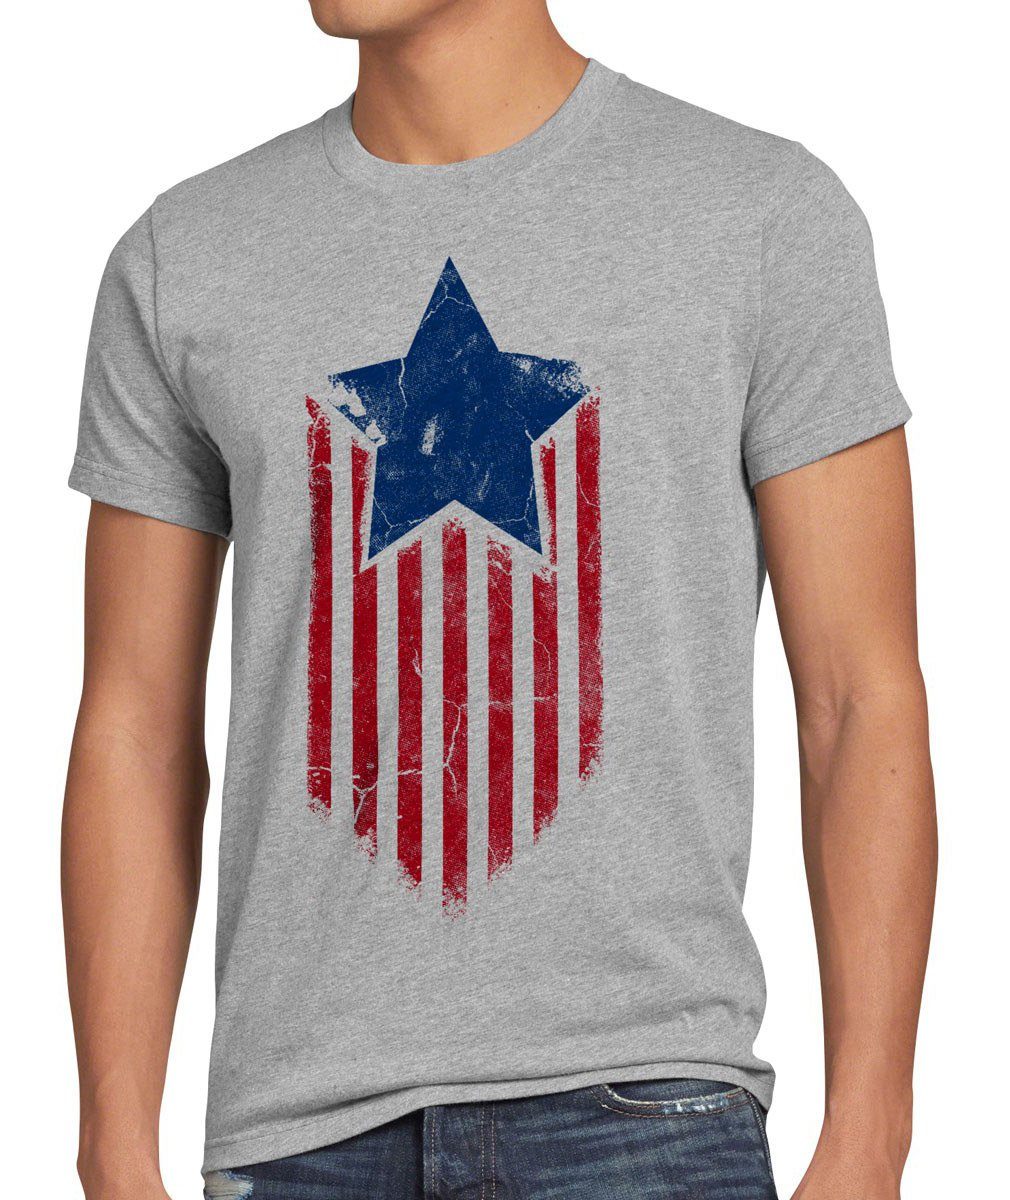 Held Superheld Print-Shirt Stripes Stars Herren us captain Amerika T-Shirt States meliert USA style3 Flagge grau